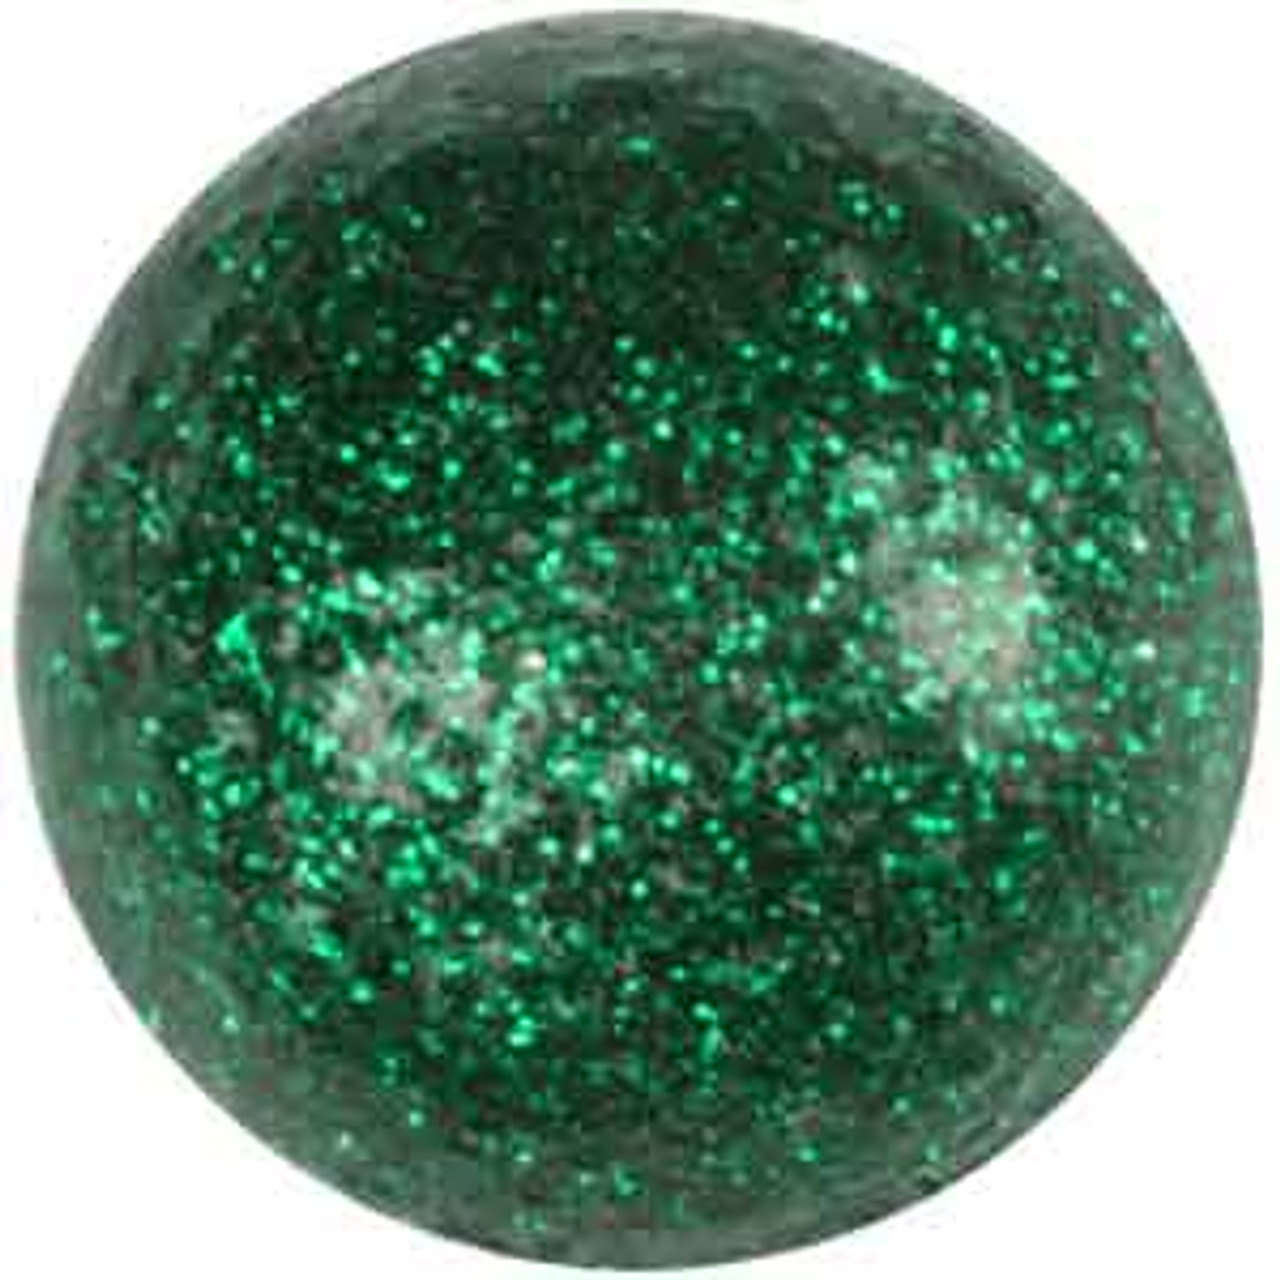 LE Light Elegance Dry Glitter Emerald Green - 4gms